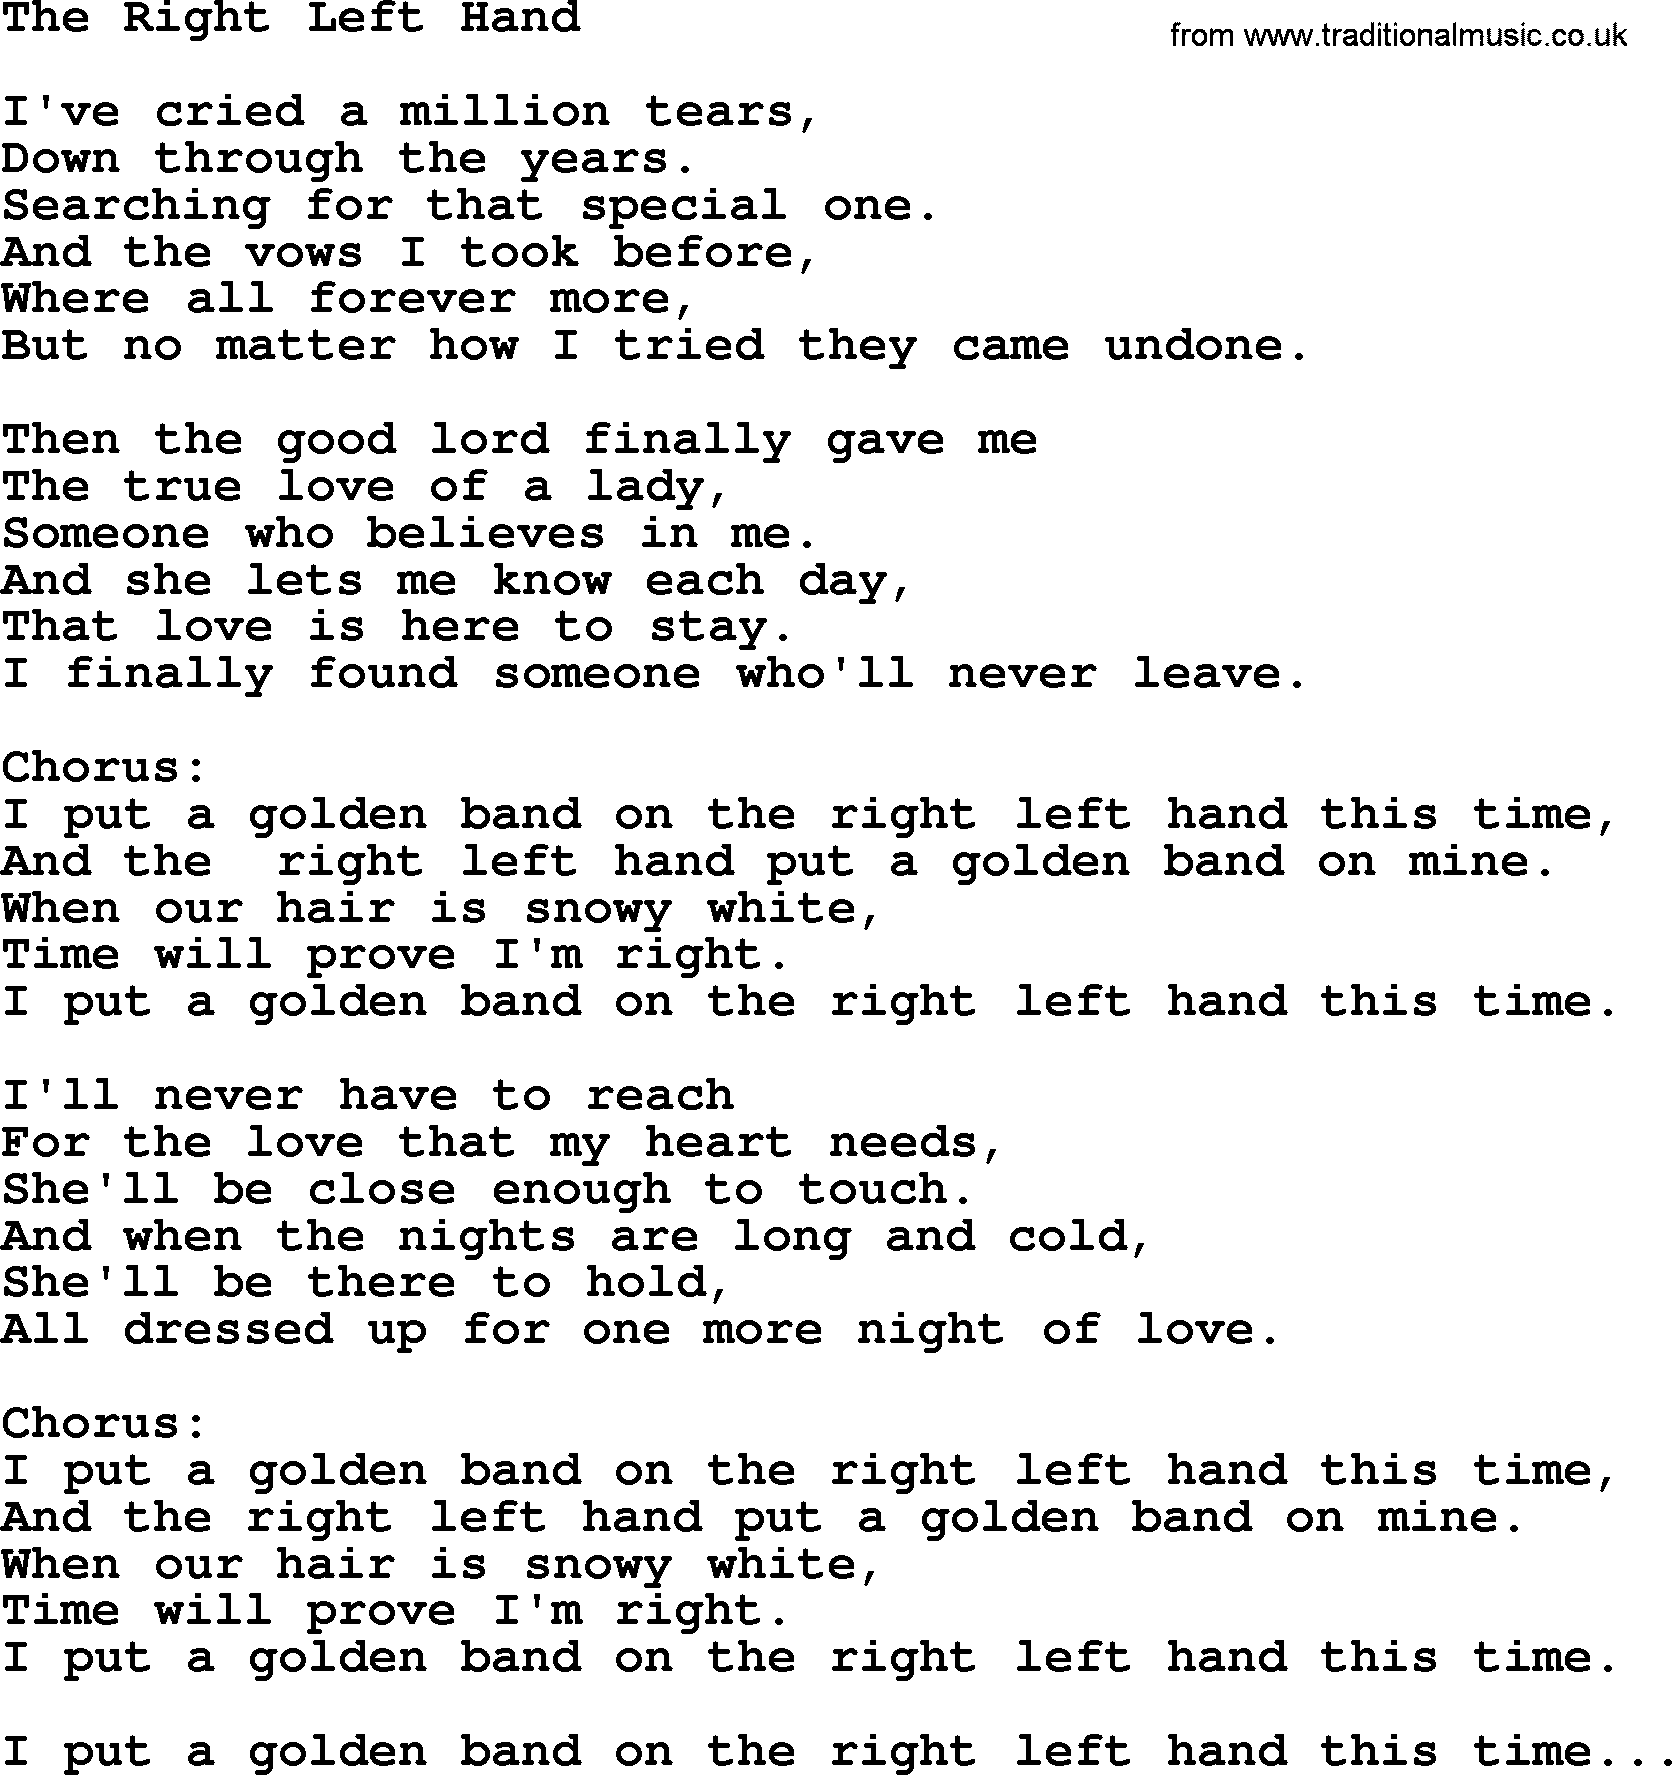 George Jones song: The Right Left Hand, lyrics